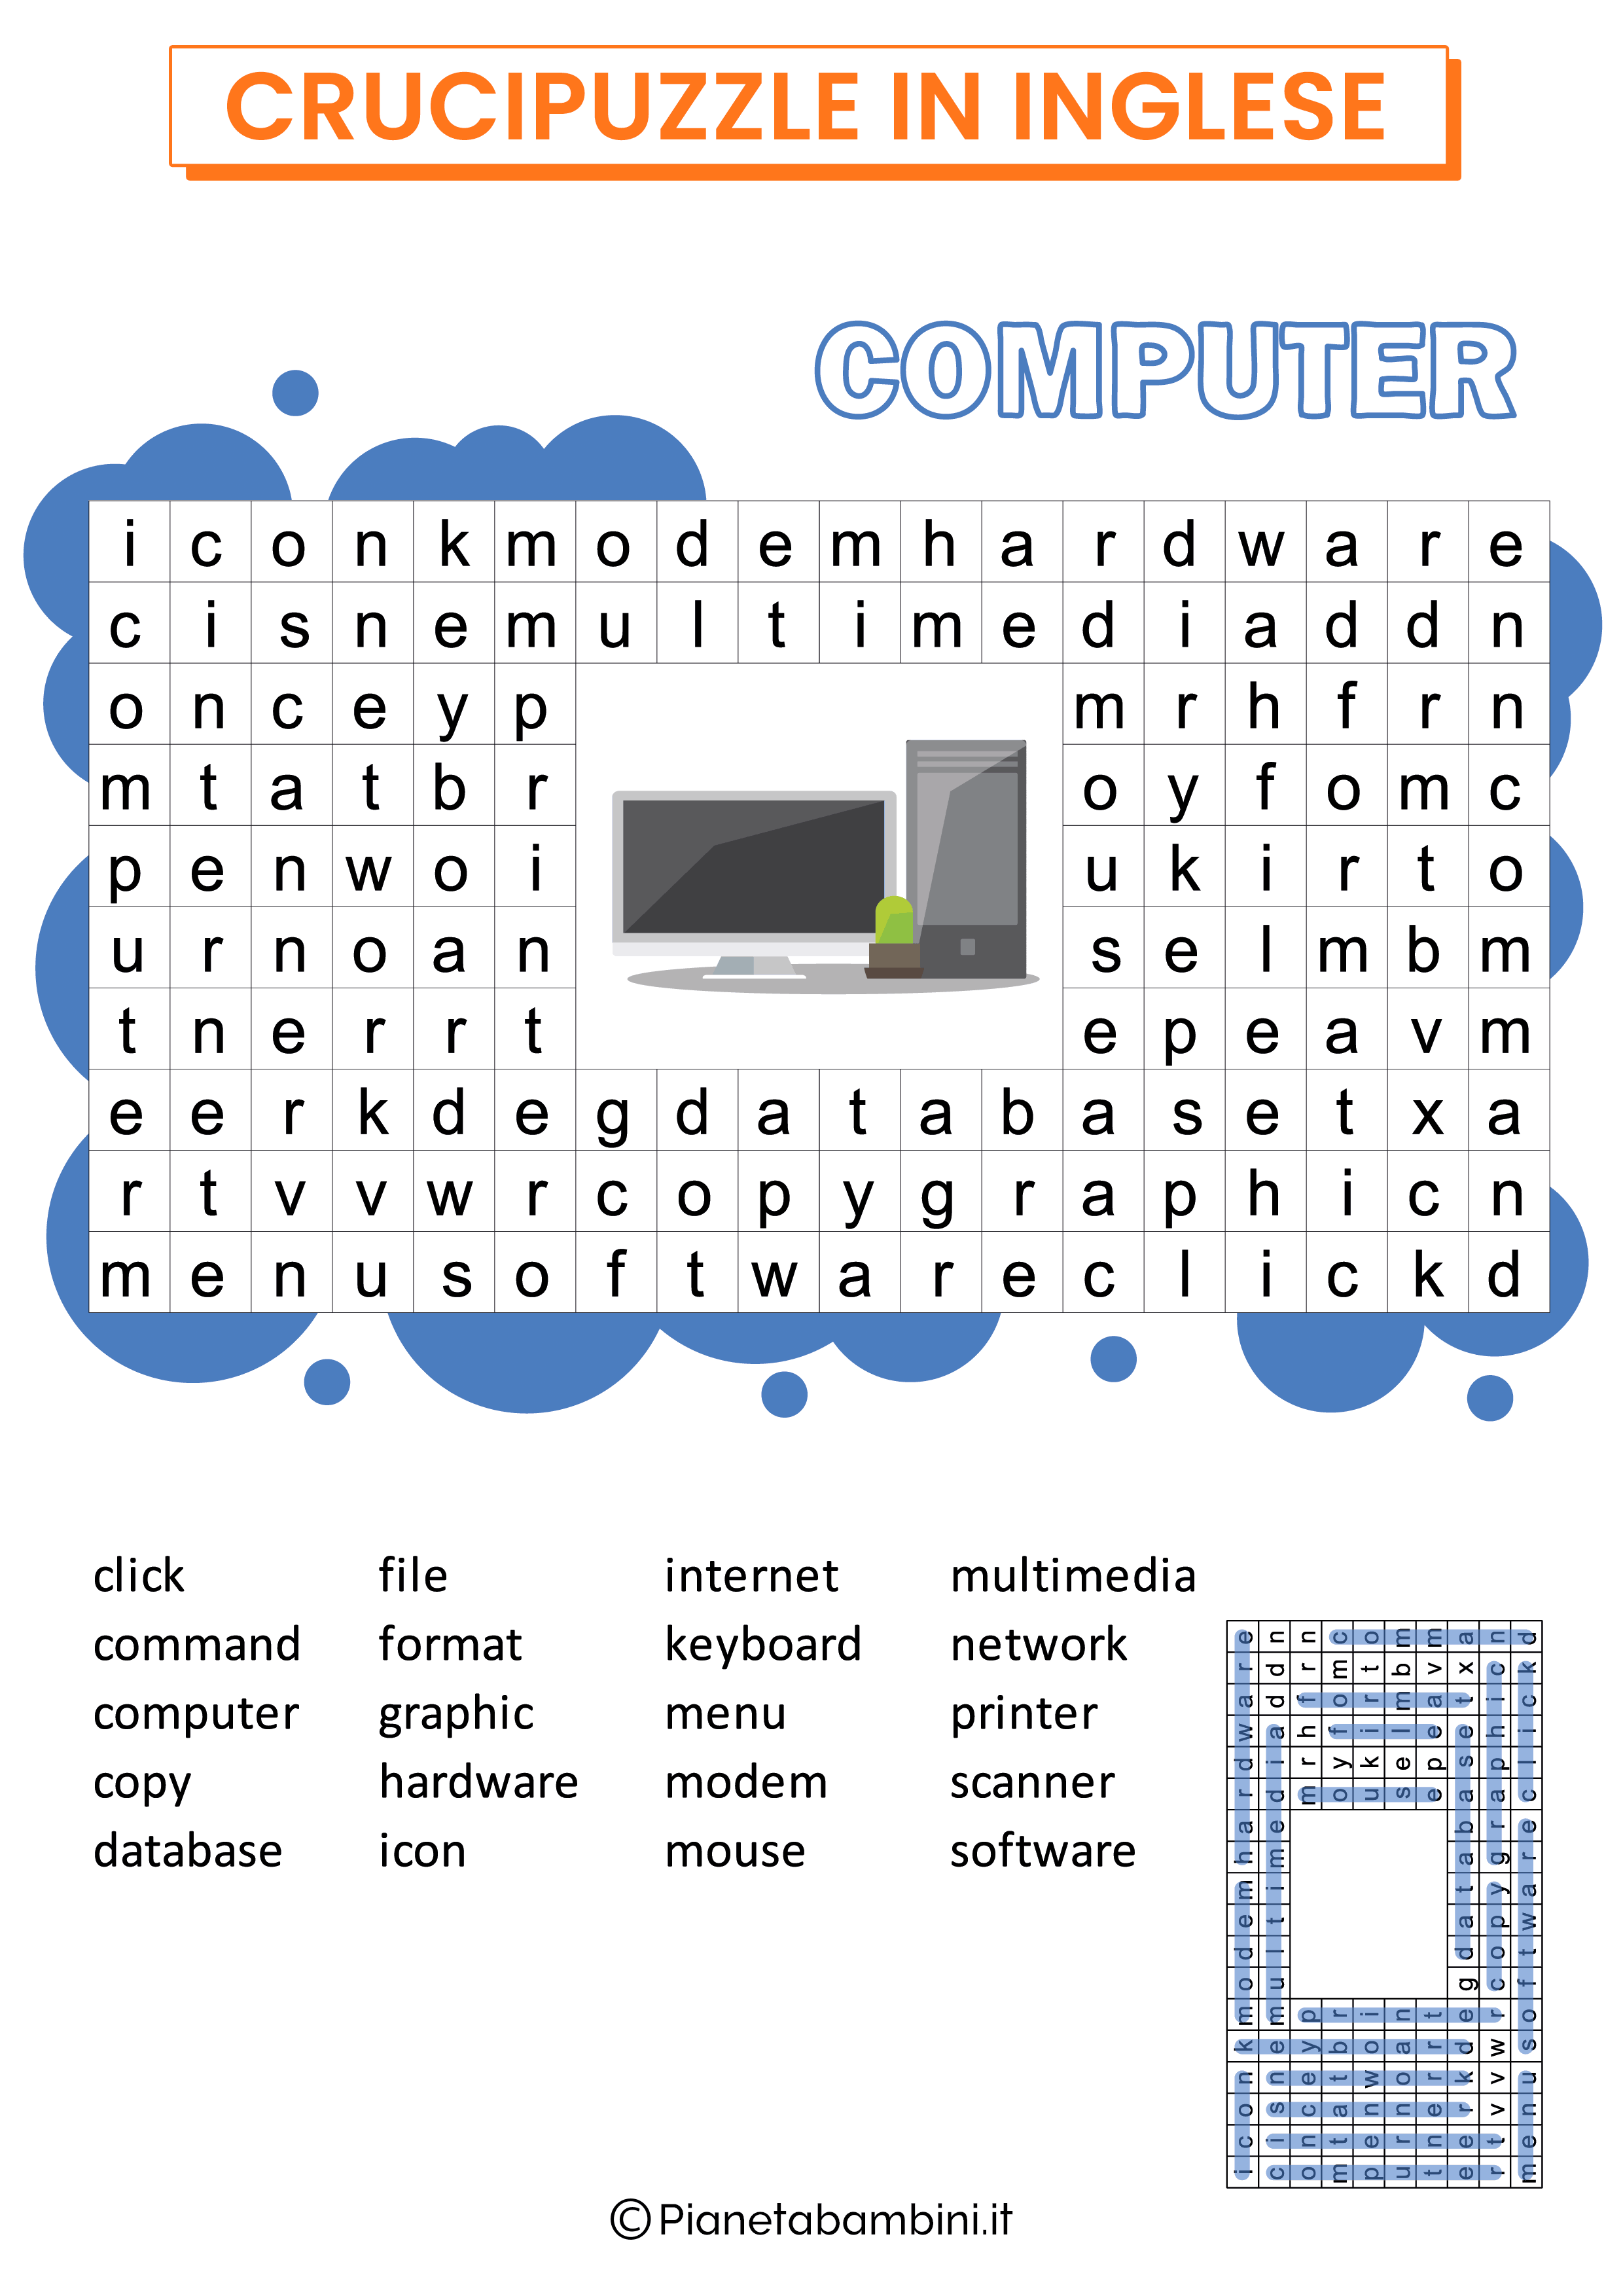 Crucipuzzle Inglese Computer